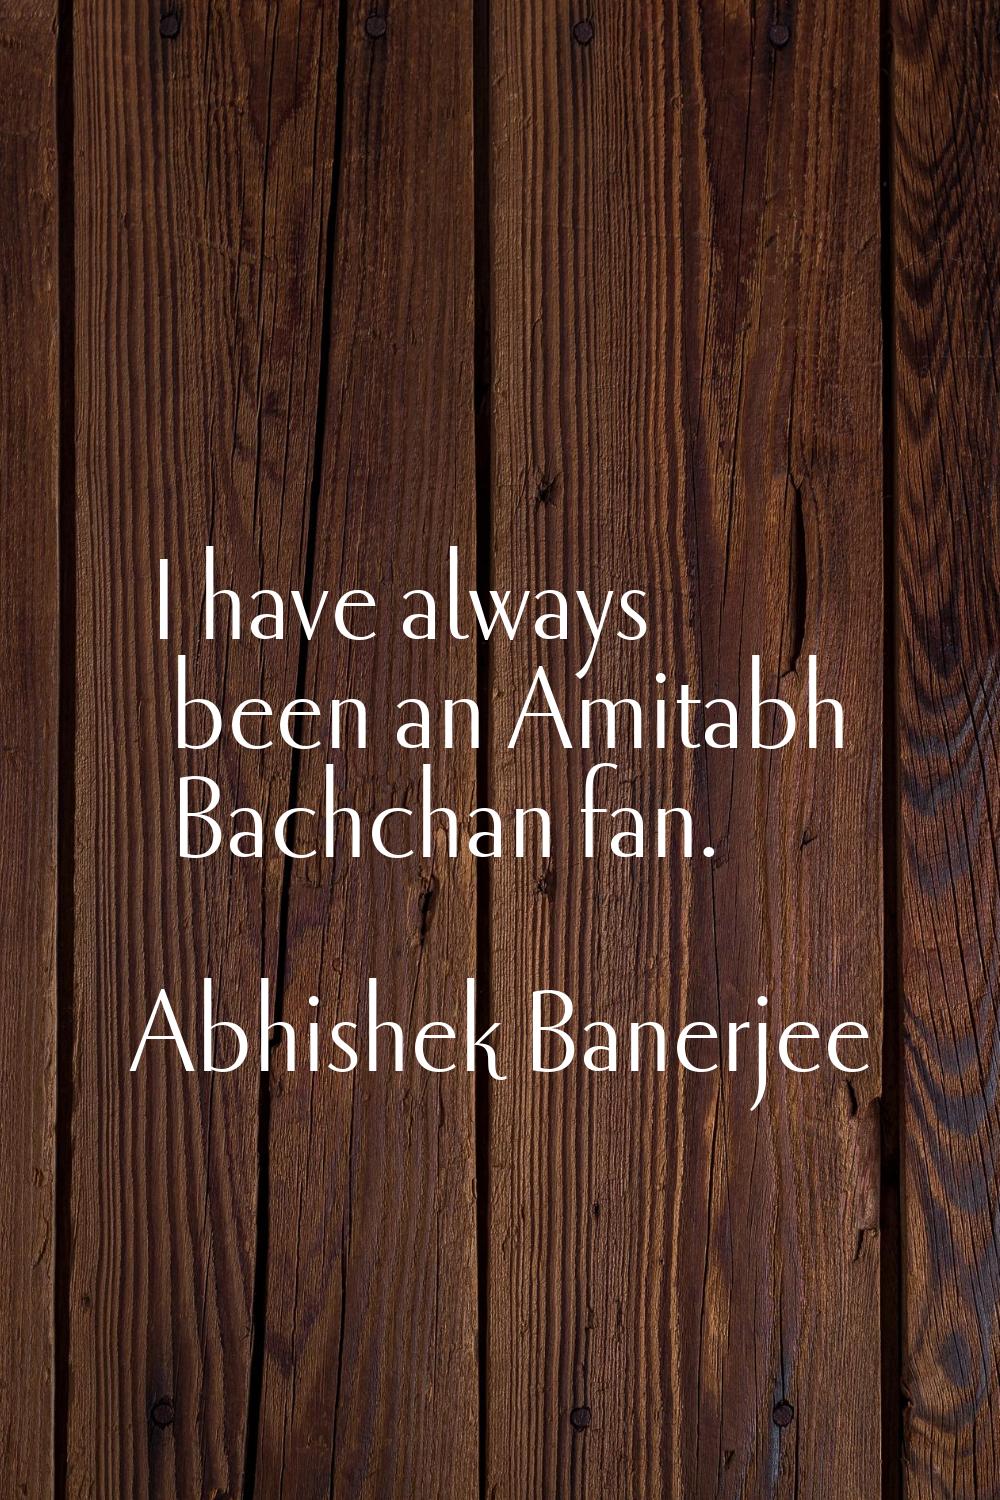 I have always been an Amitabh Bachchan fan.